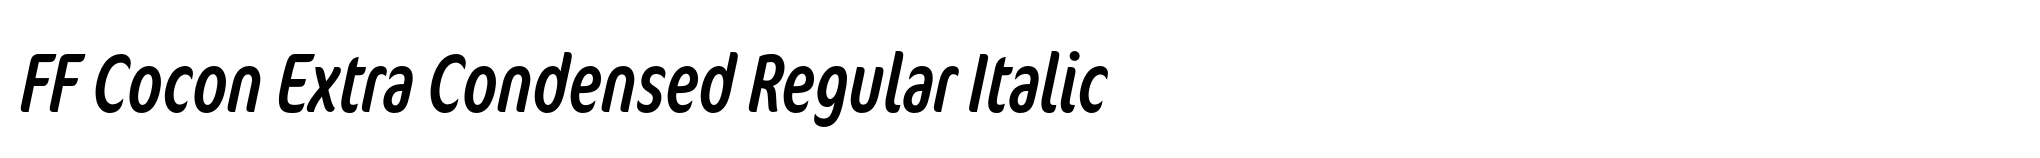 FF Cocon Extra Condensed Regular Italic image